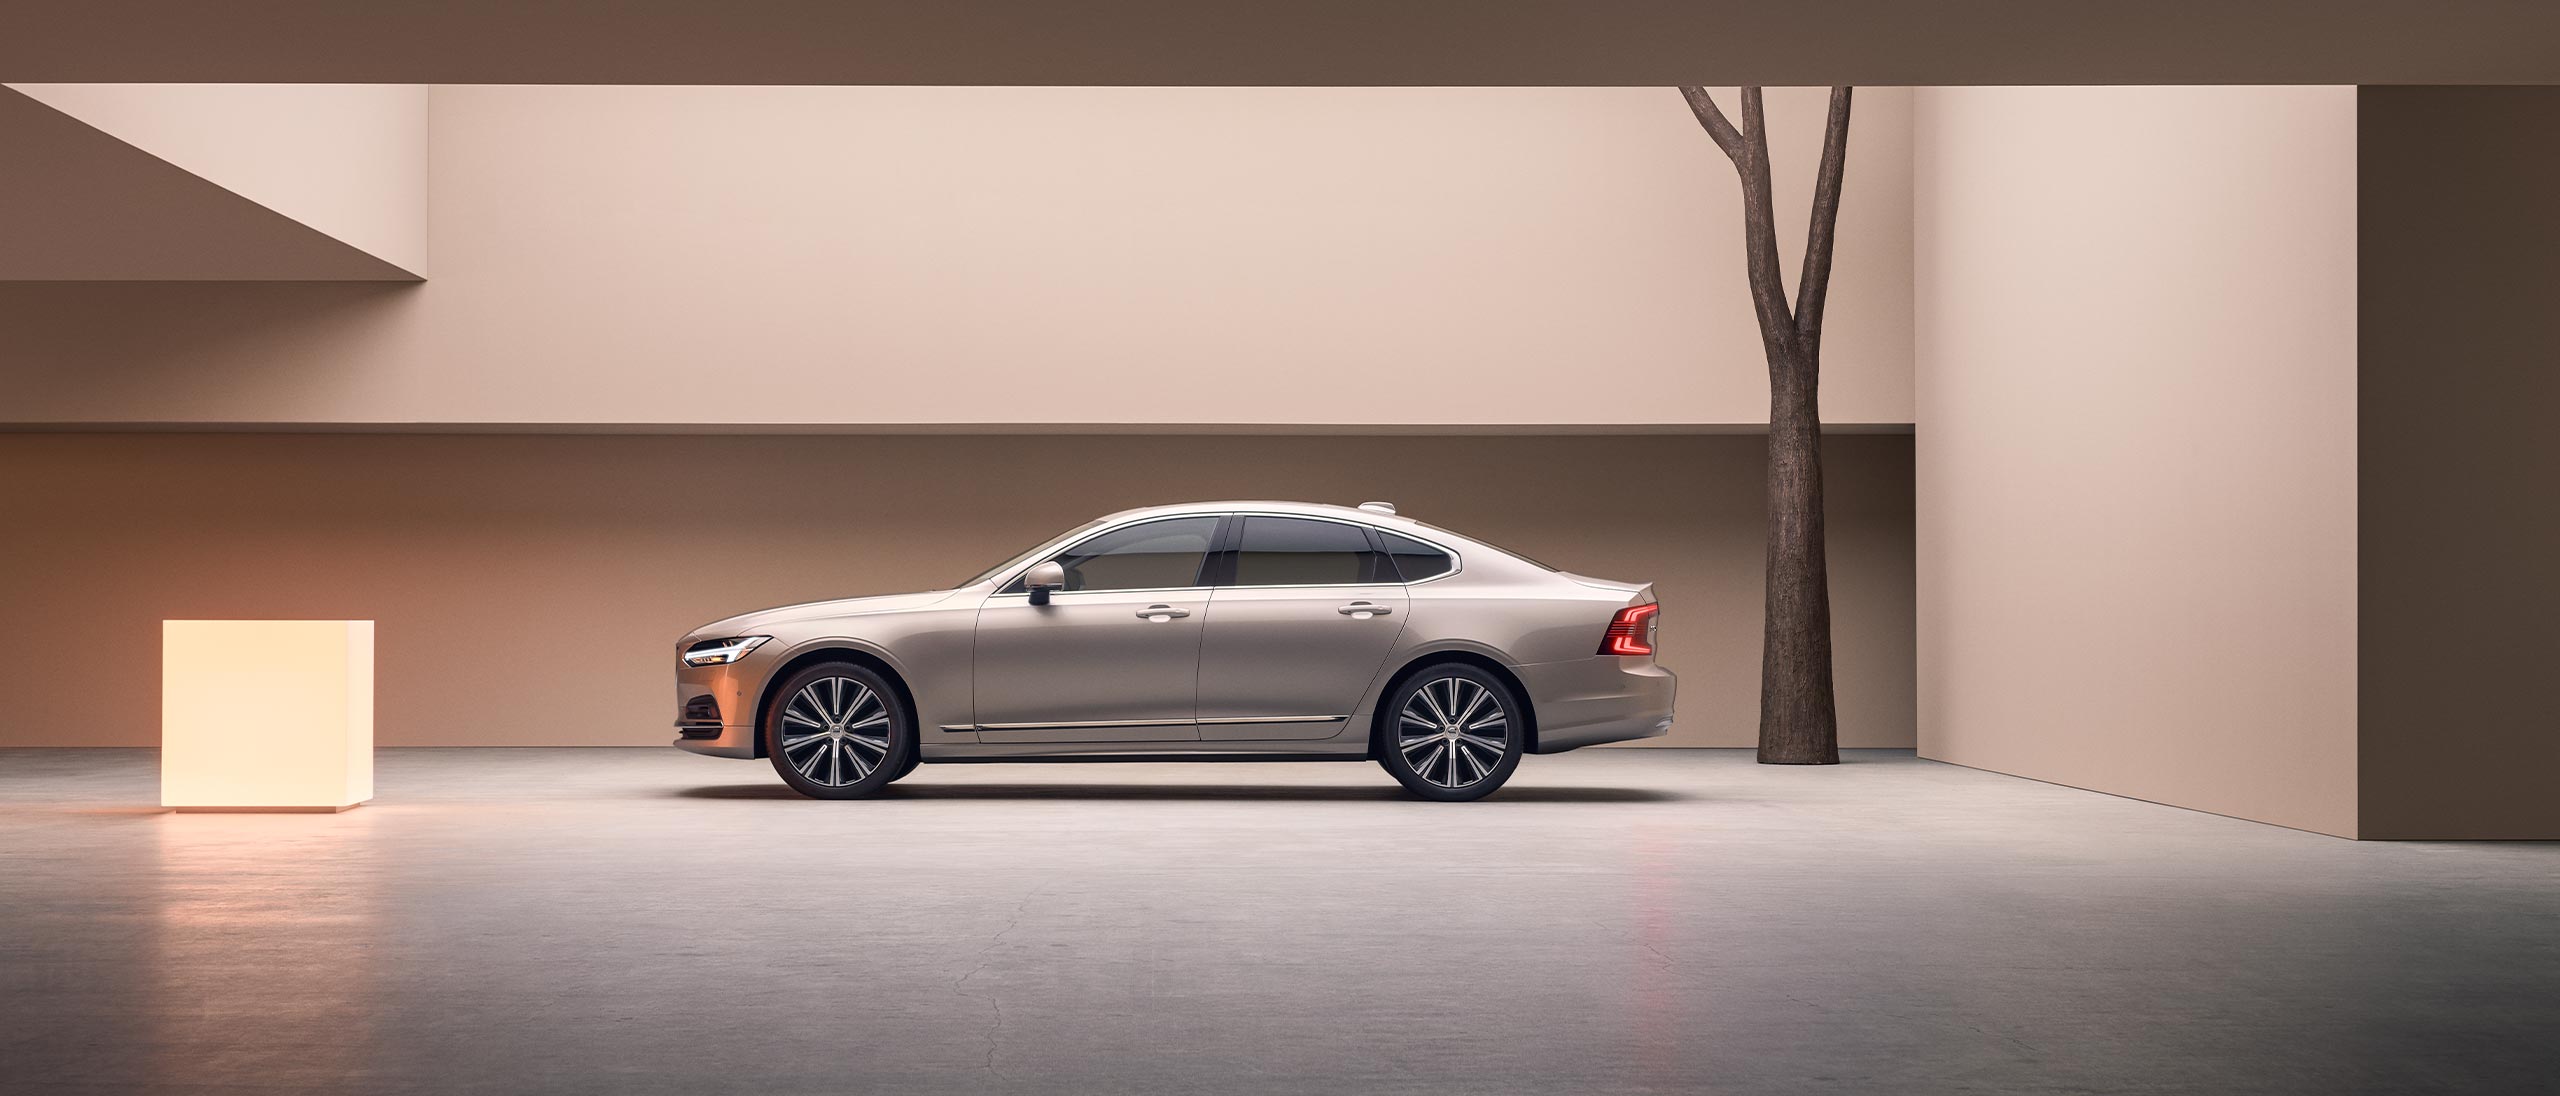 Volvo S90 snimljen s bočne strane parkiran ispred sivog betonskog zida.